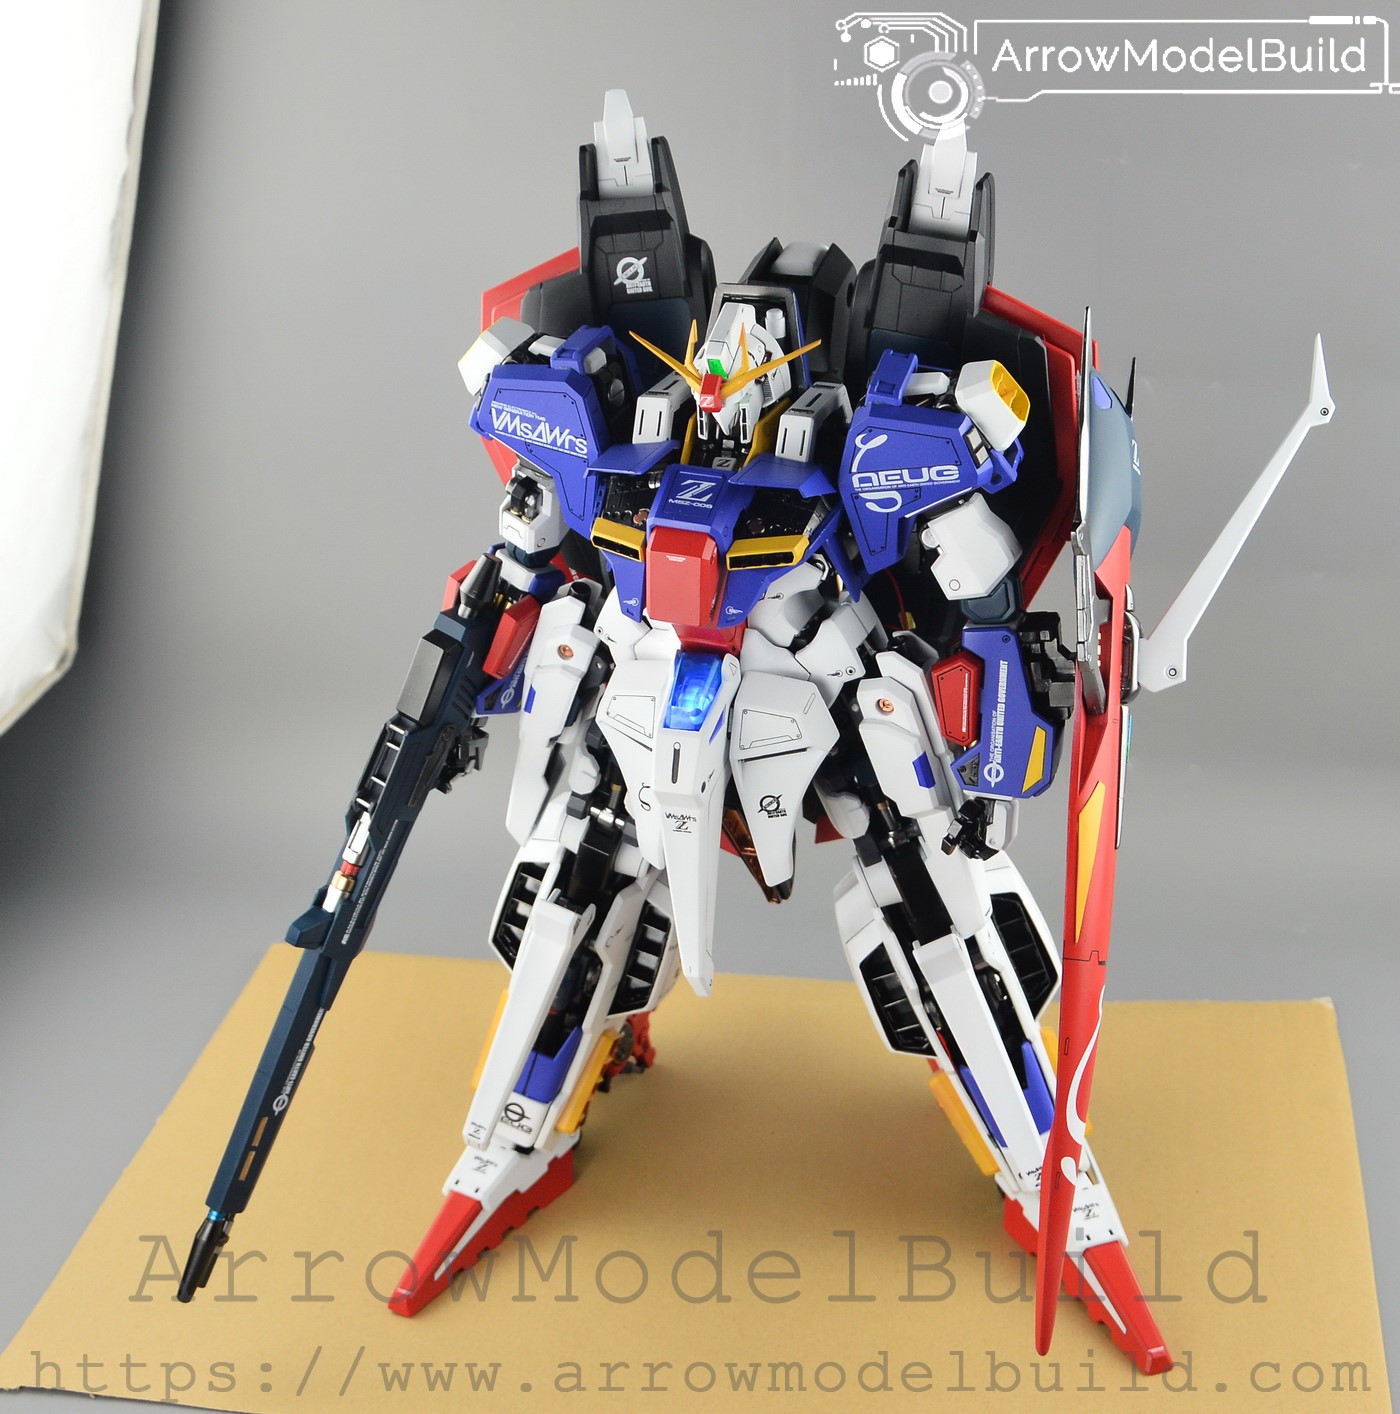 ArrowModelBuild - Figure and Robot, Gundam, Military, Vehicle, Arrow, Model  Build. ArrowModelBuild Z Gundam Built & Painted 1/48 Model Kit